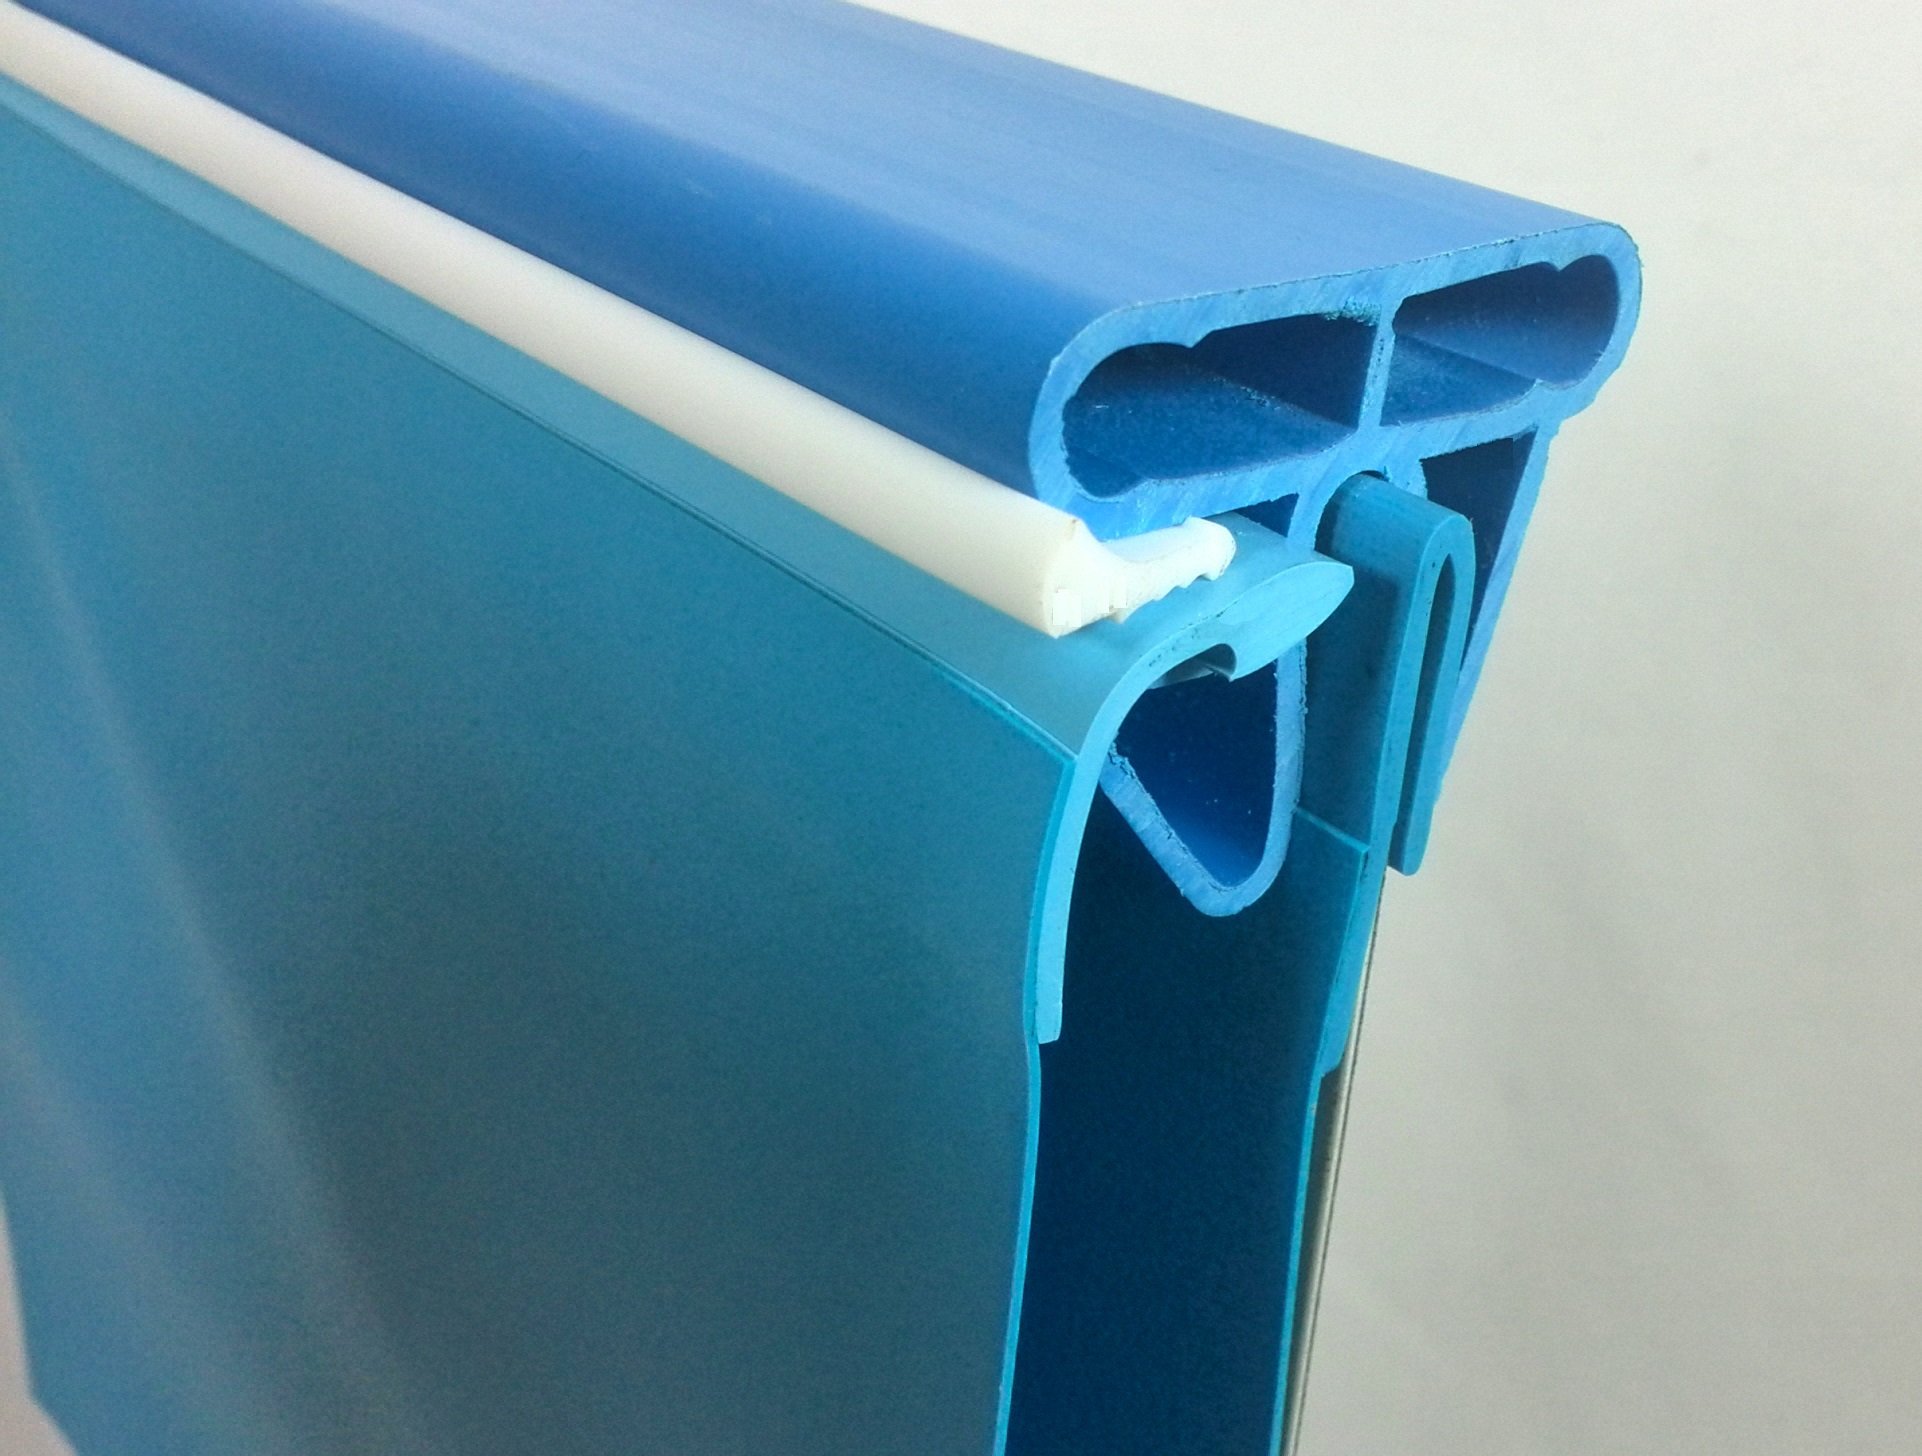 Stahlwandpool achtform Exklusiv 725x460x150 cm, Stahl 0,8 mm weiß, Folie 0,6 mm blau, Einhängebiese